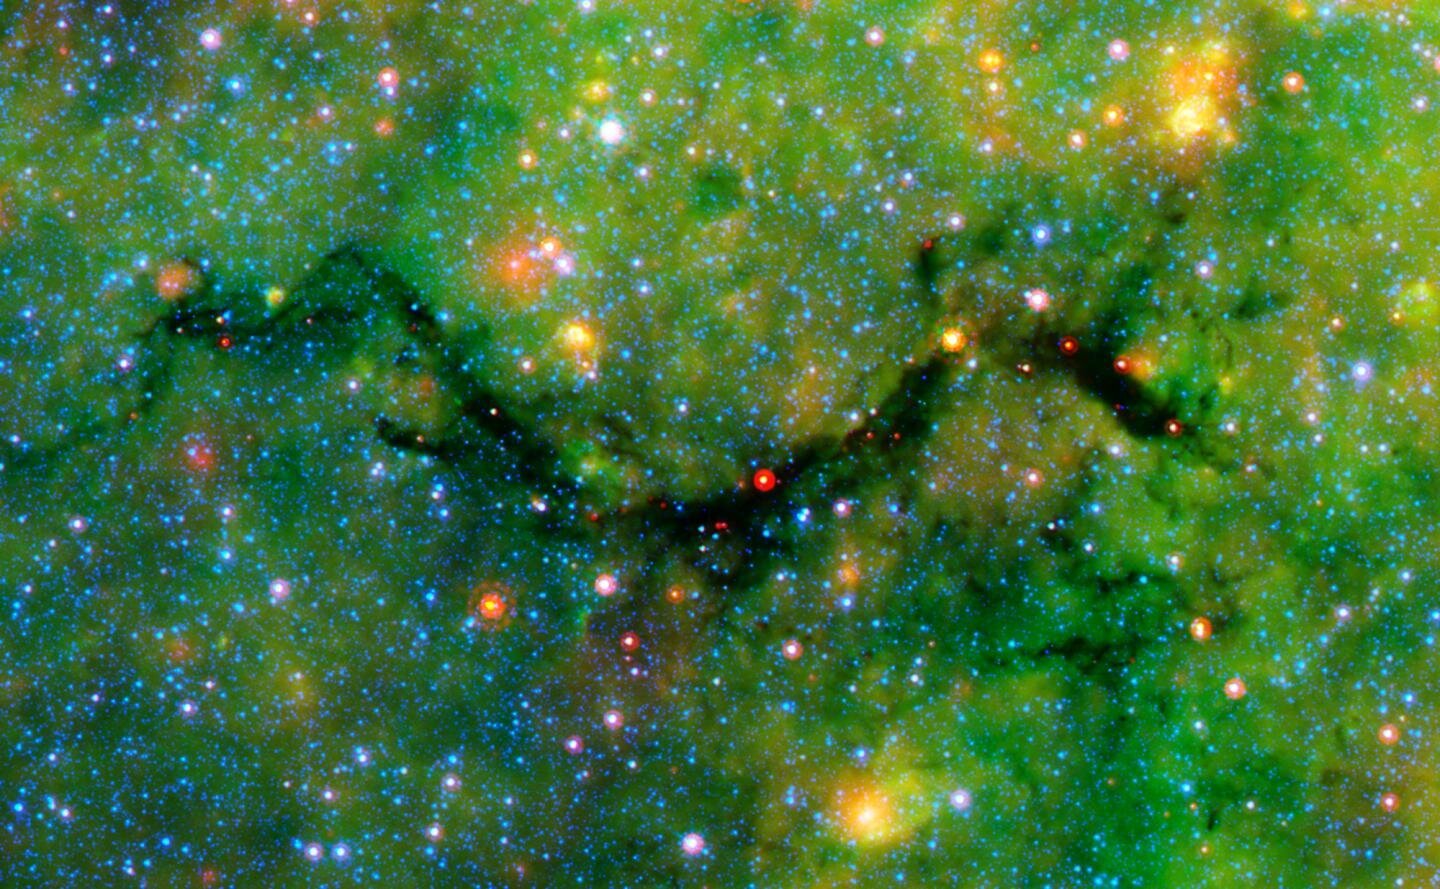 James Webb telescope peeks into the birth region of massive stars